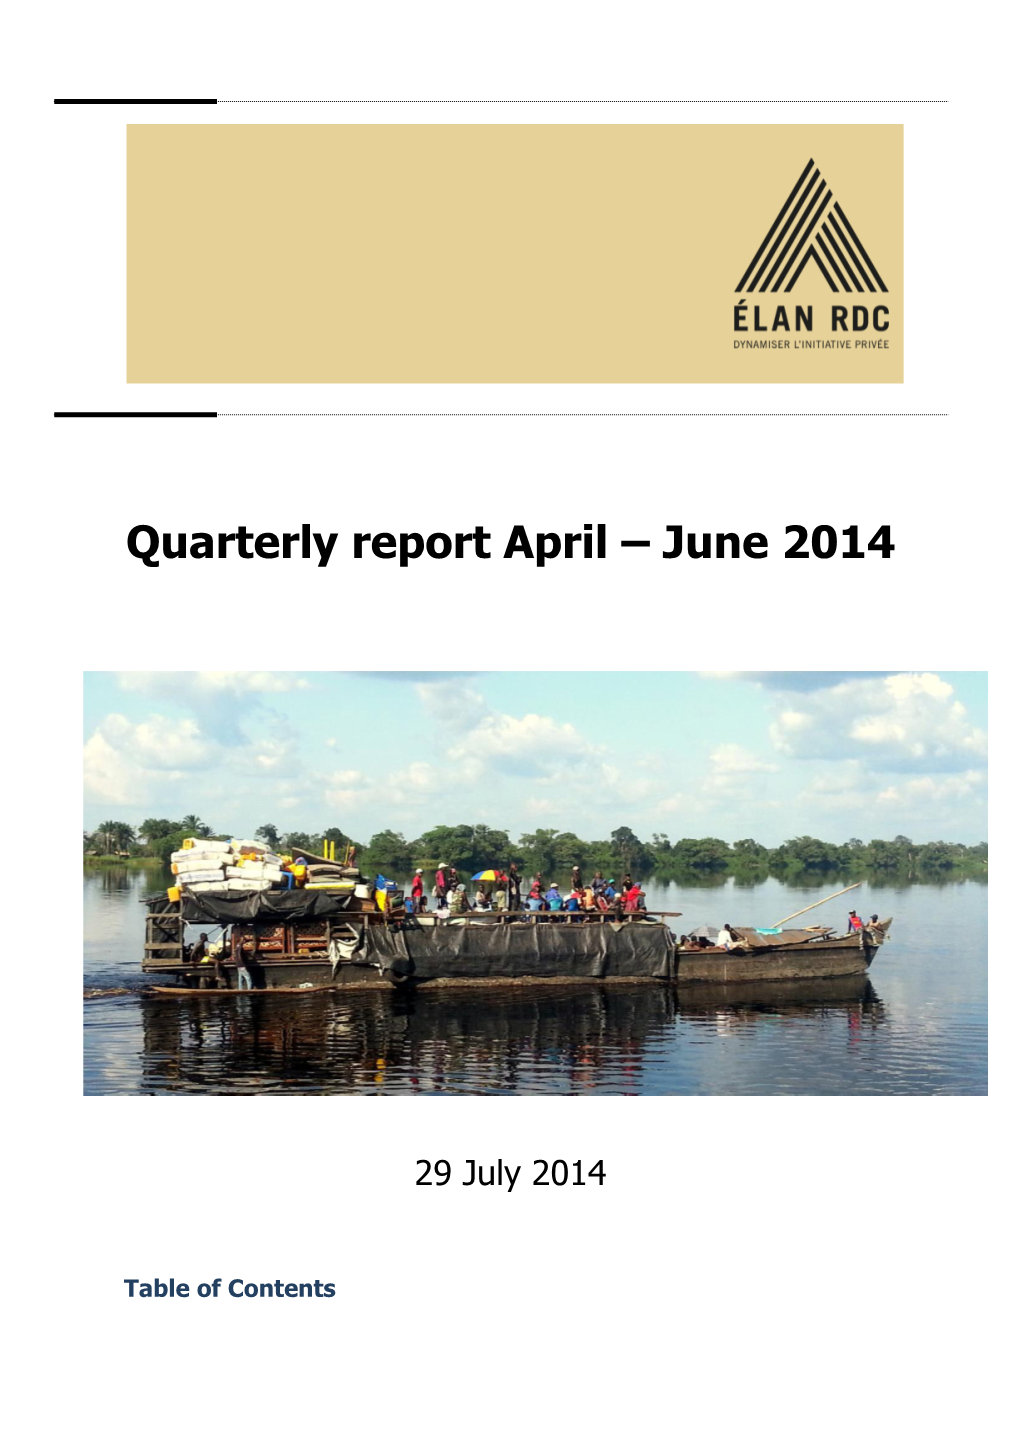 Quarterly Report April – June 2014